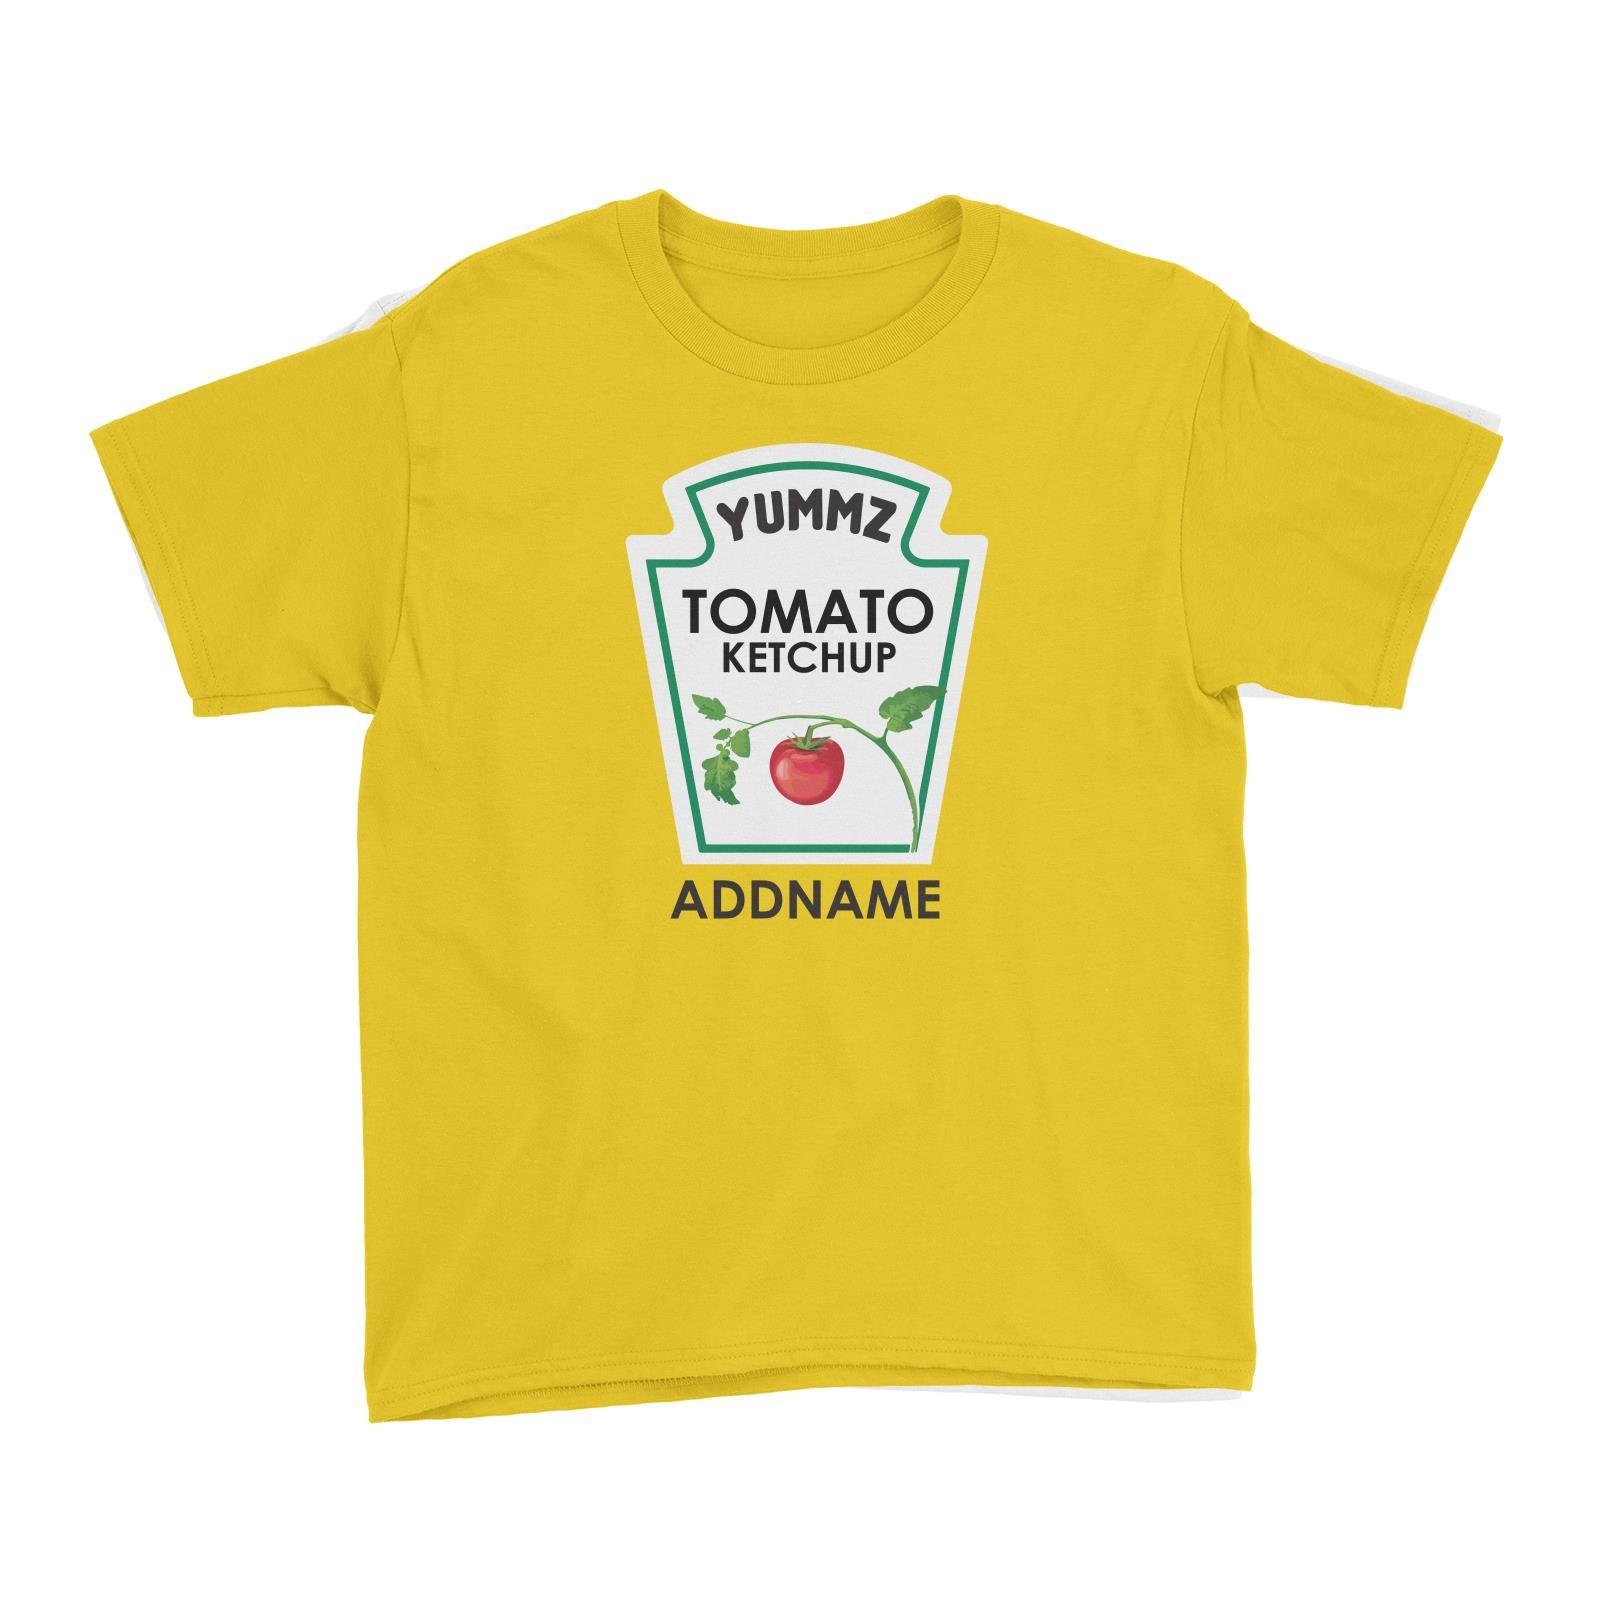 Yummz Tomato Ketchup Kid's T-Shirt